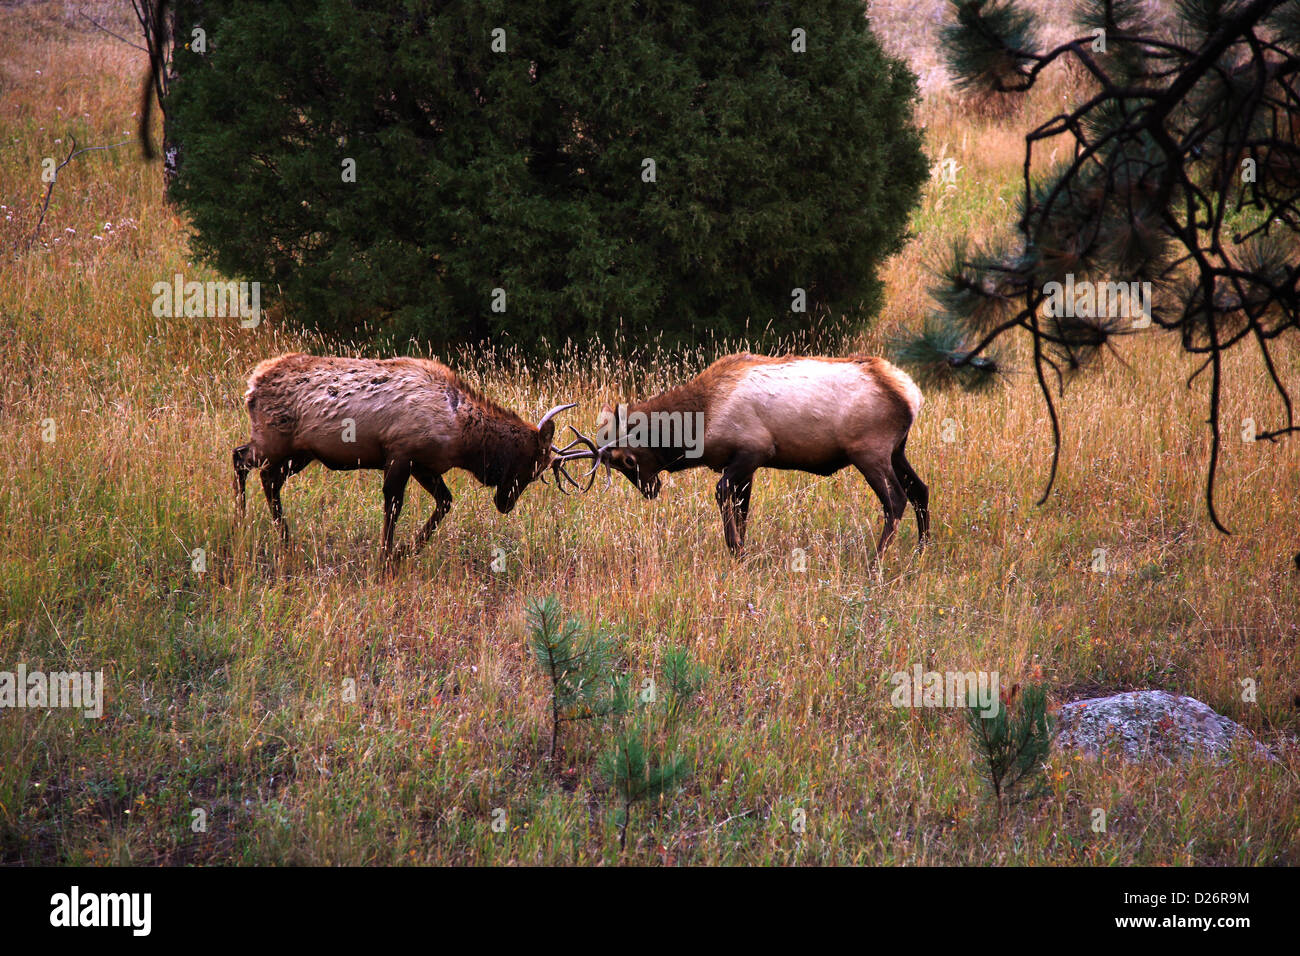 Bull elk lock horns Stock Photo Alamy